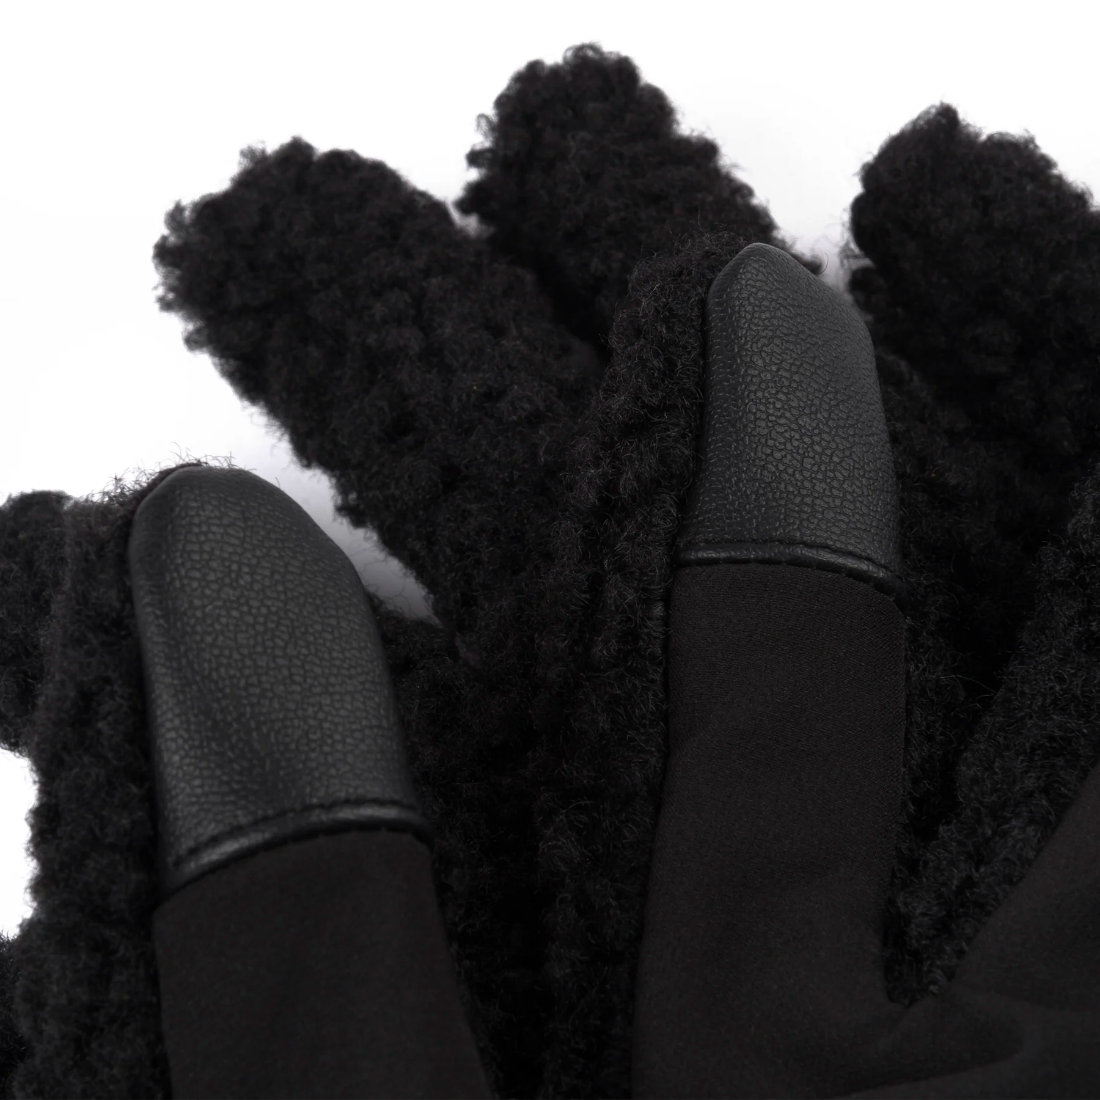 【Dime】Classic Polar Fleece Gloves - Black